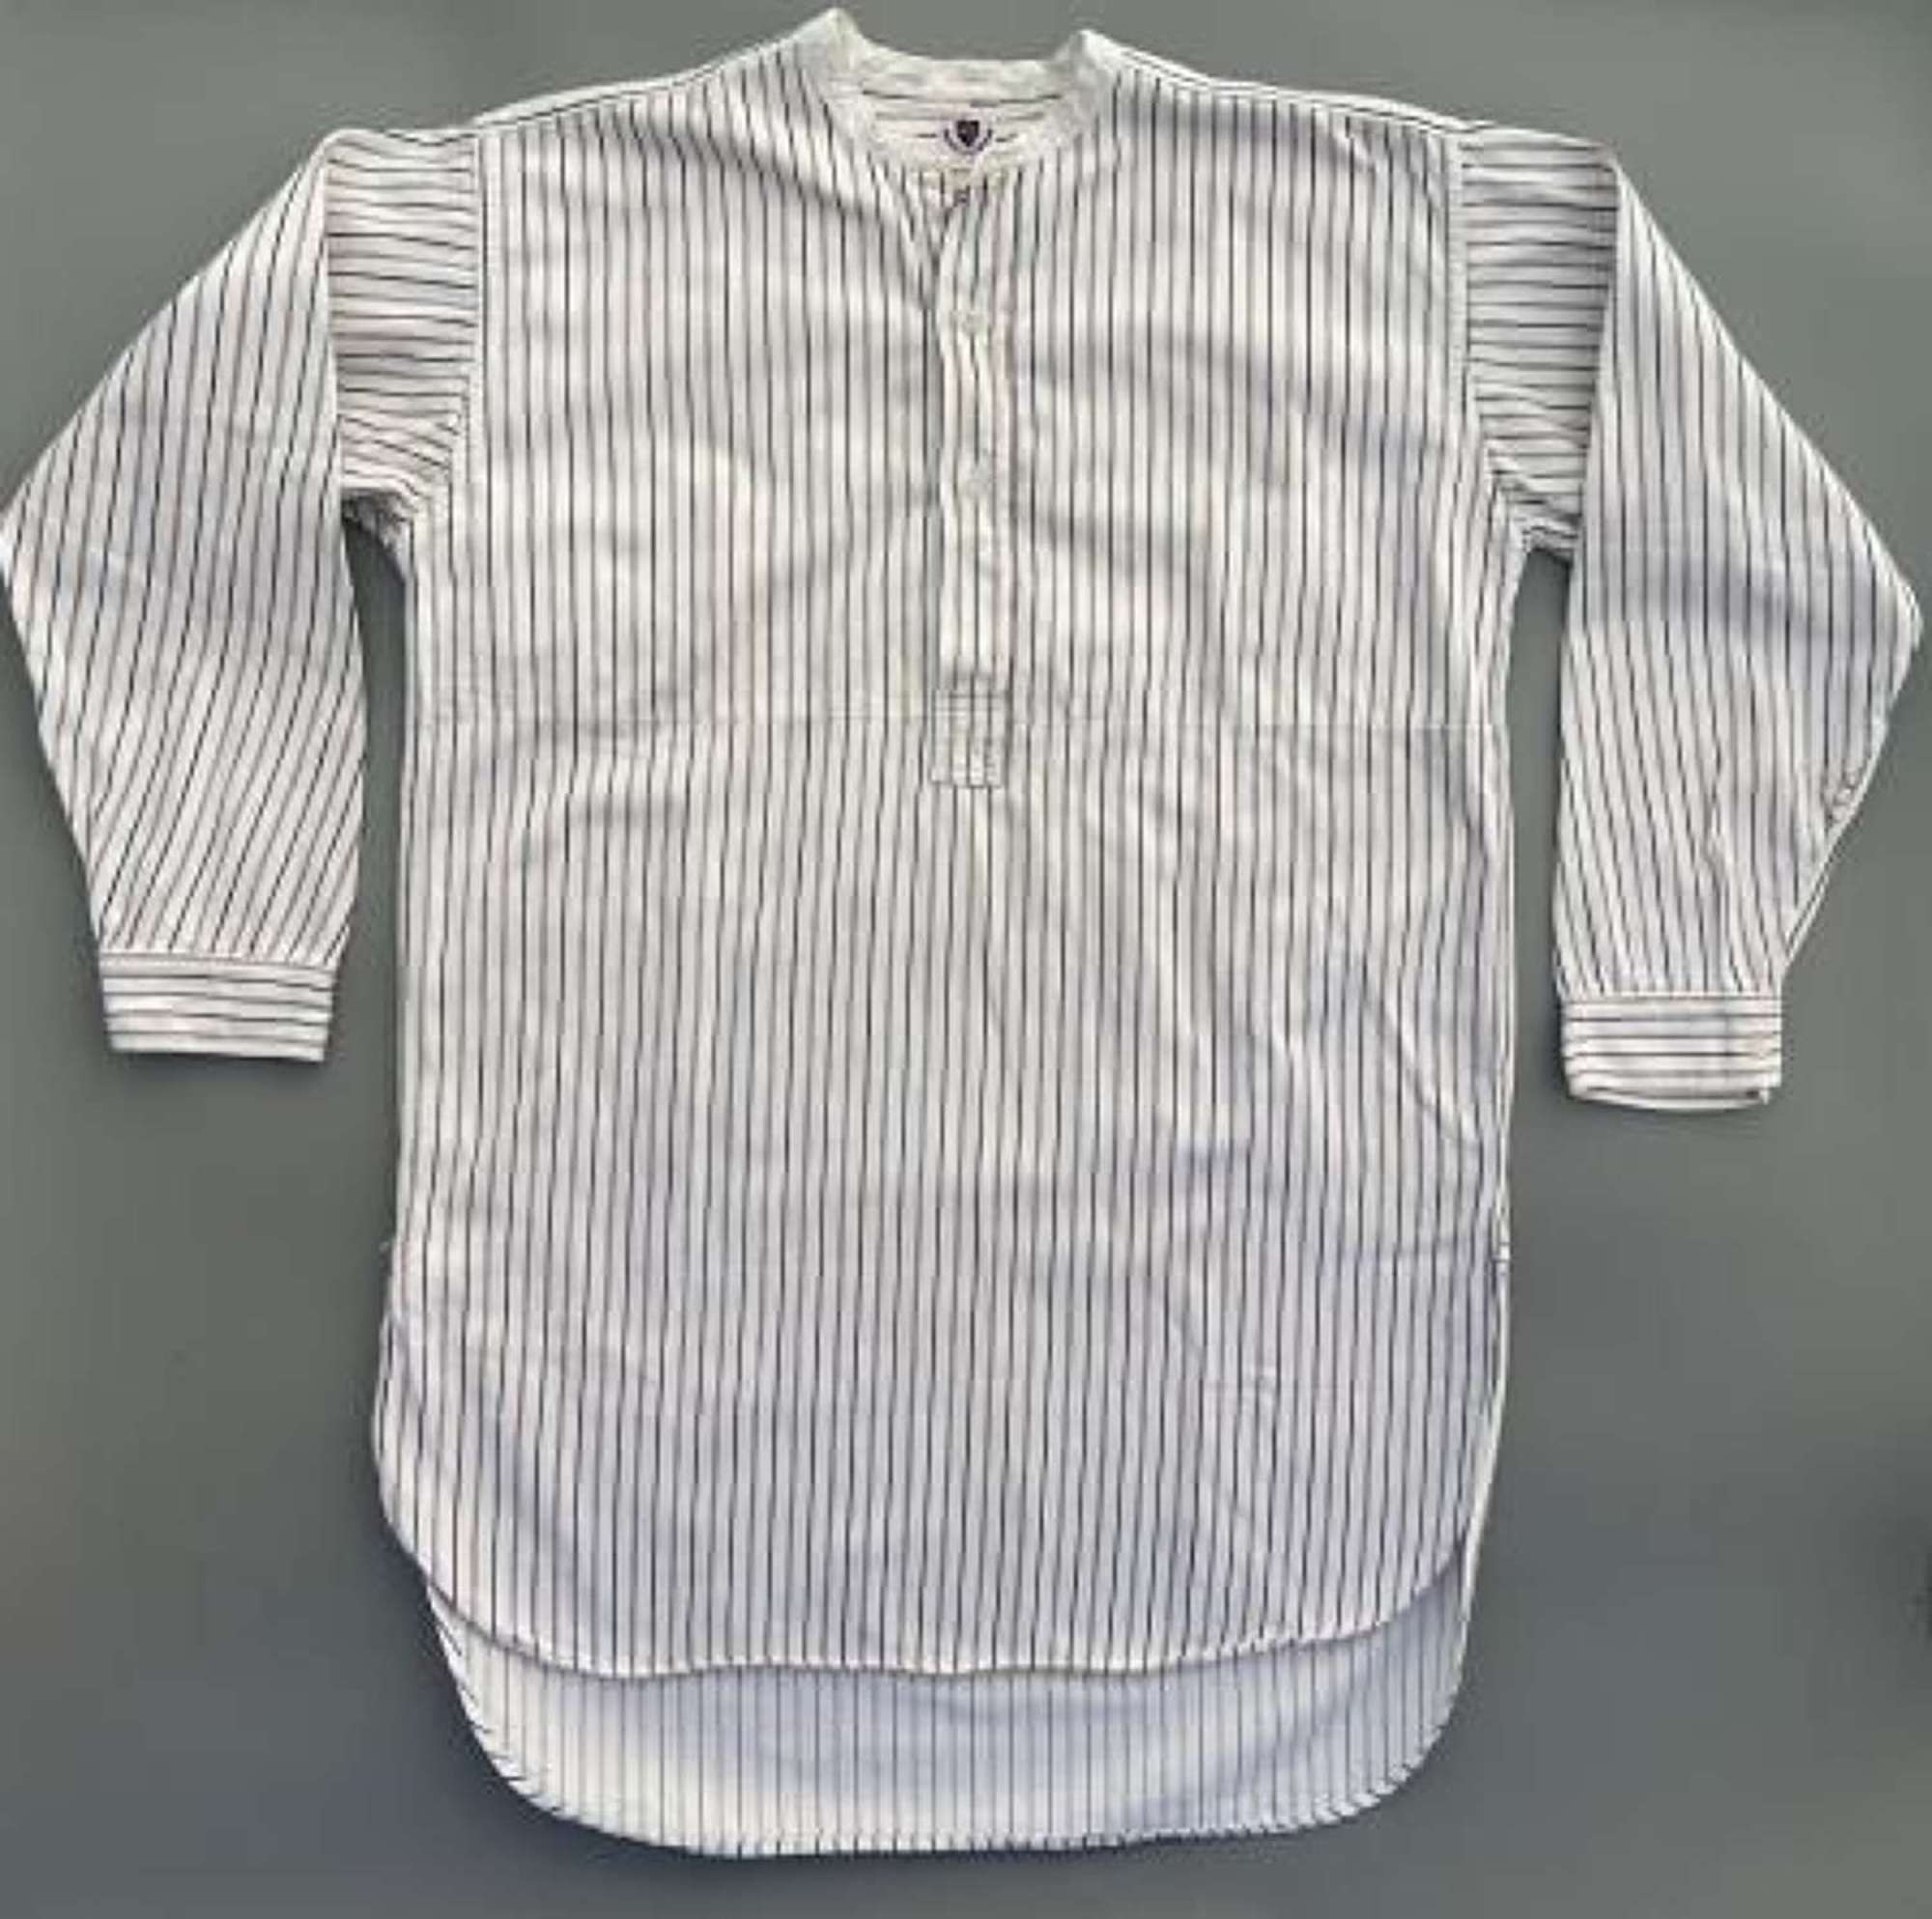 Original 1930s Men's Shirt by 'Water Lane Brand'